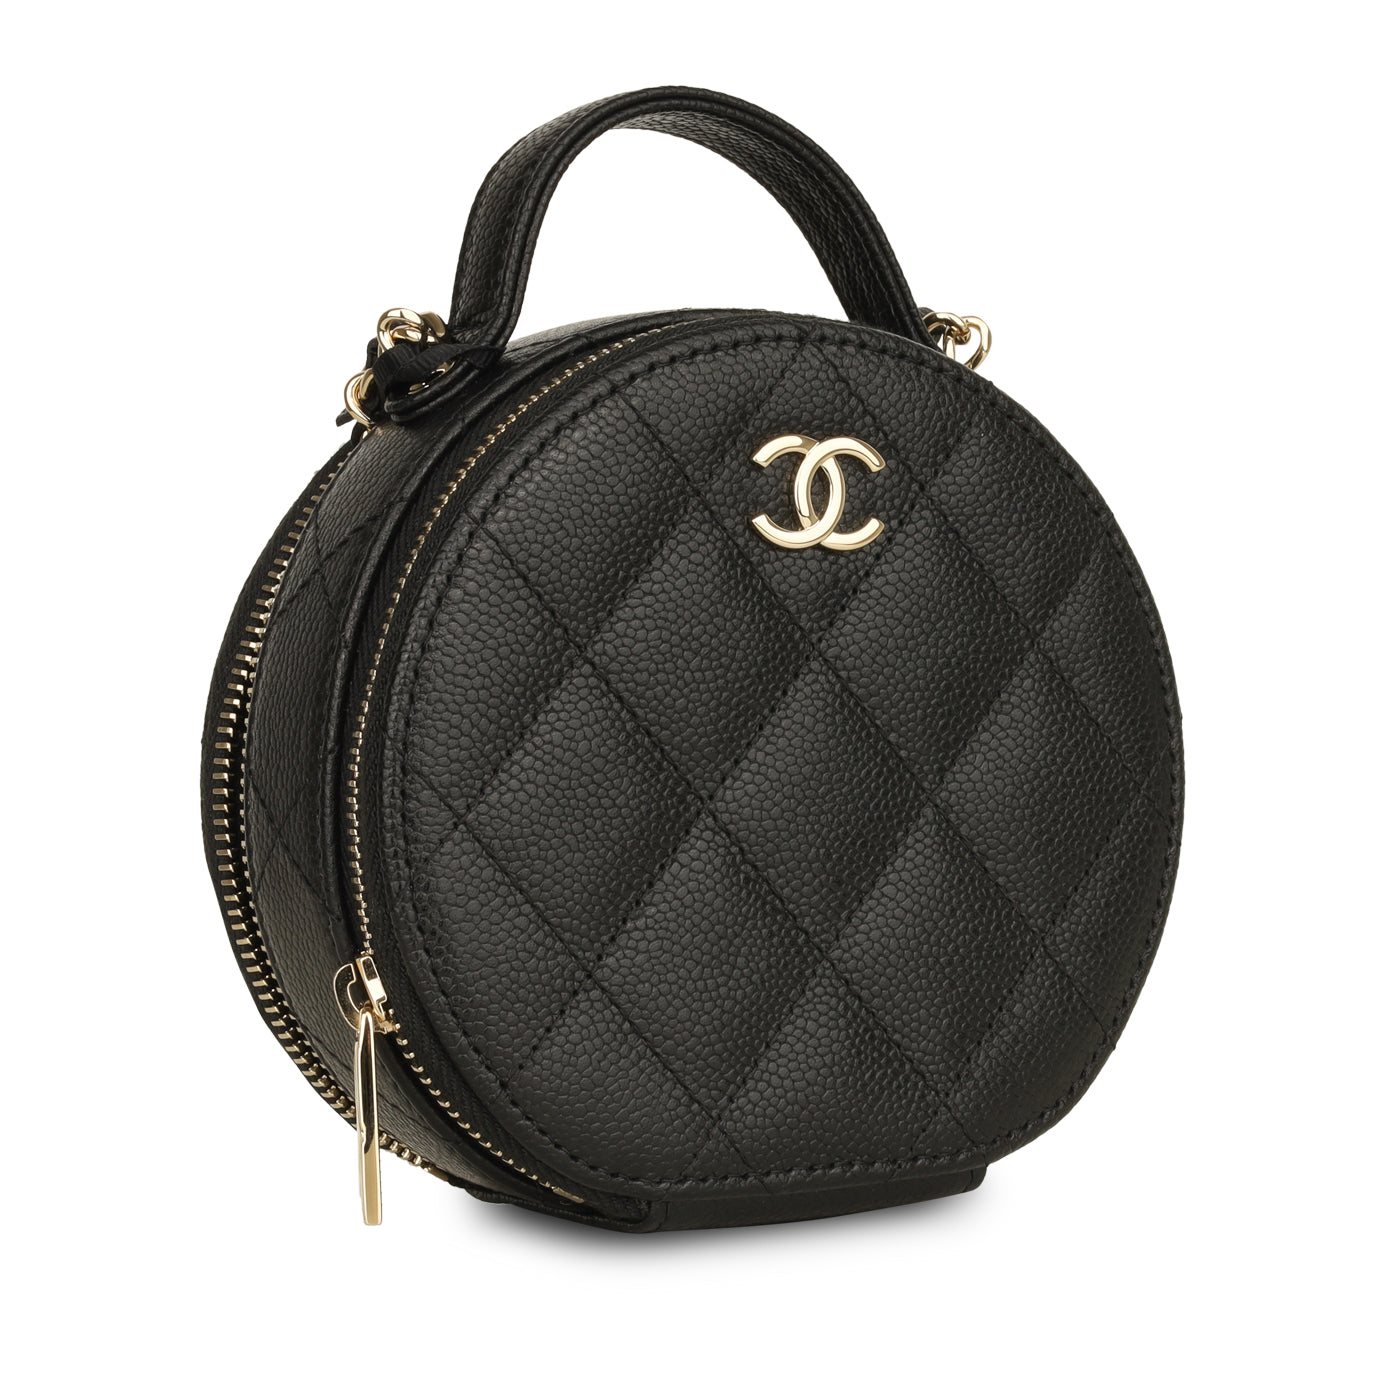 Chanel - Round Vanity on Chain - Black Caviar - Unused